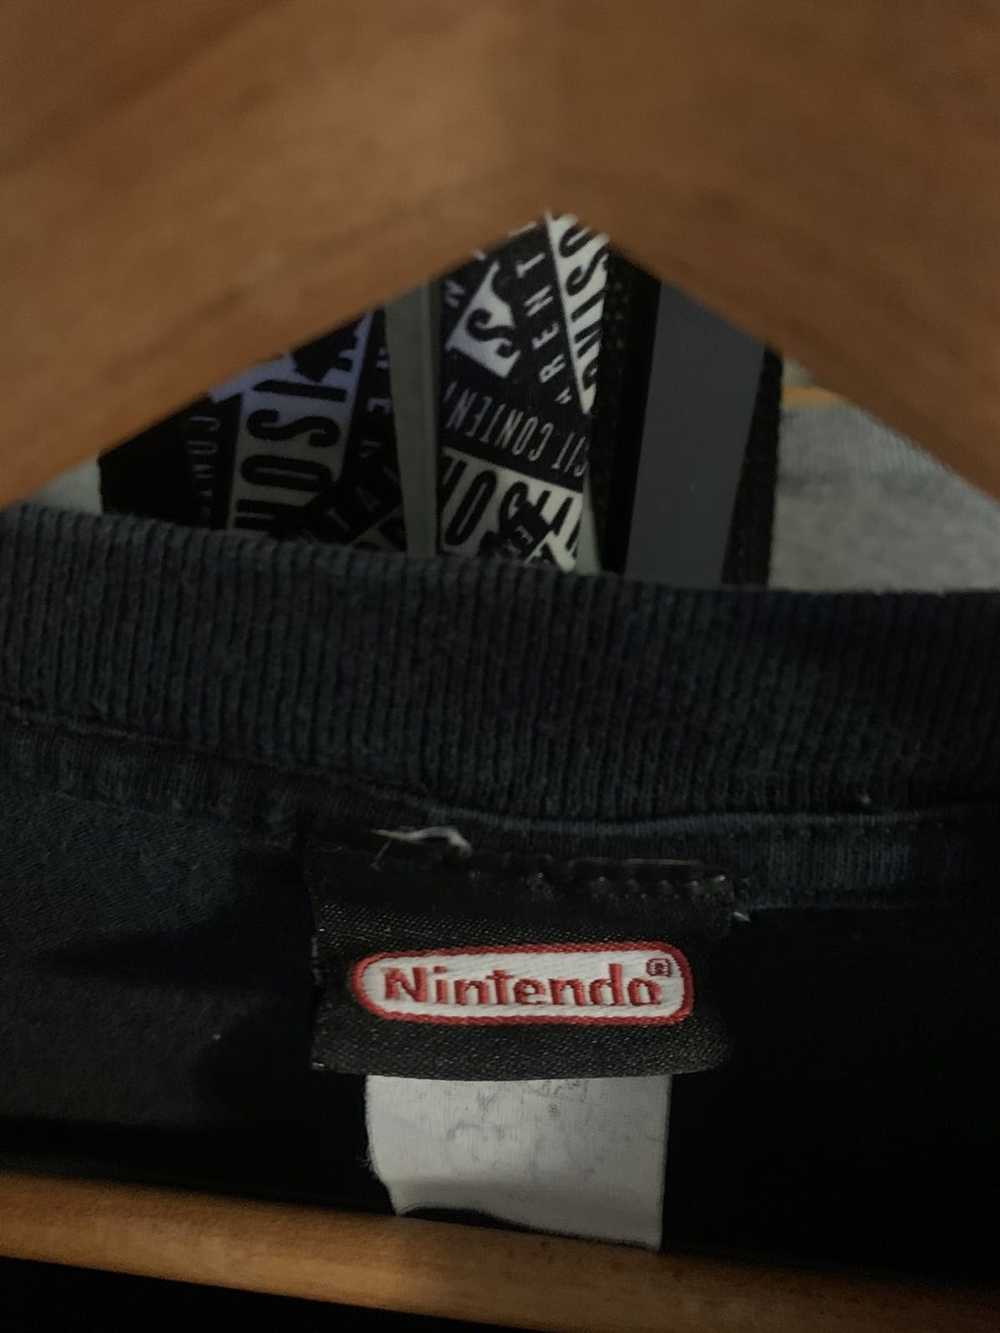 Nintendo × Vintage 2005 vintage Nintendo t shirt - image 4